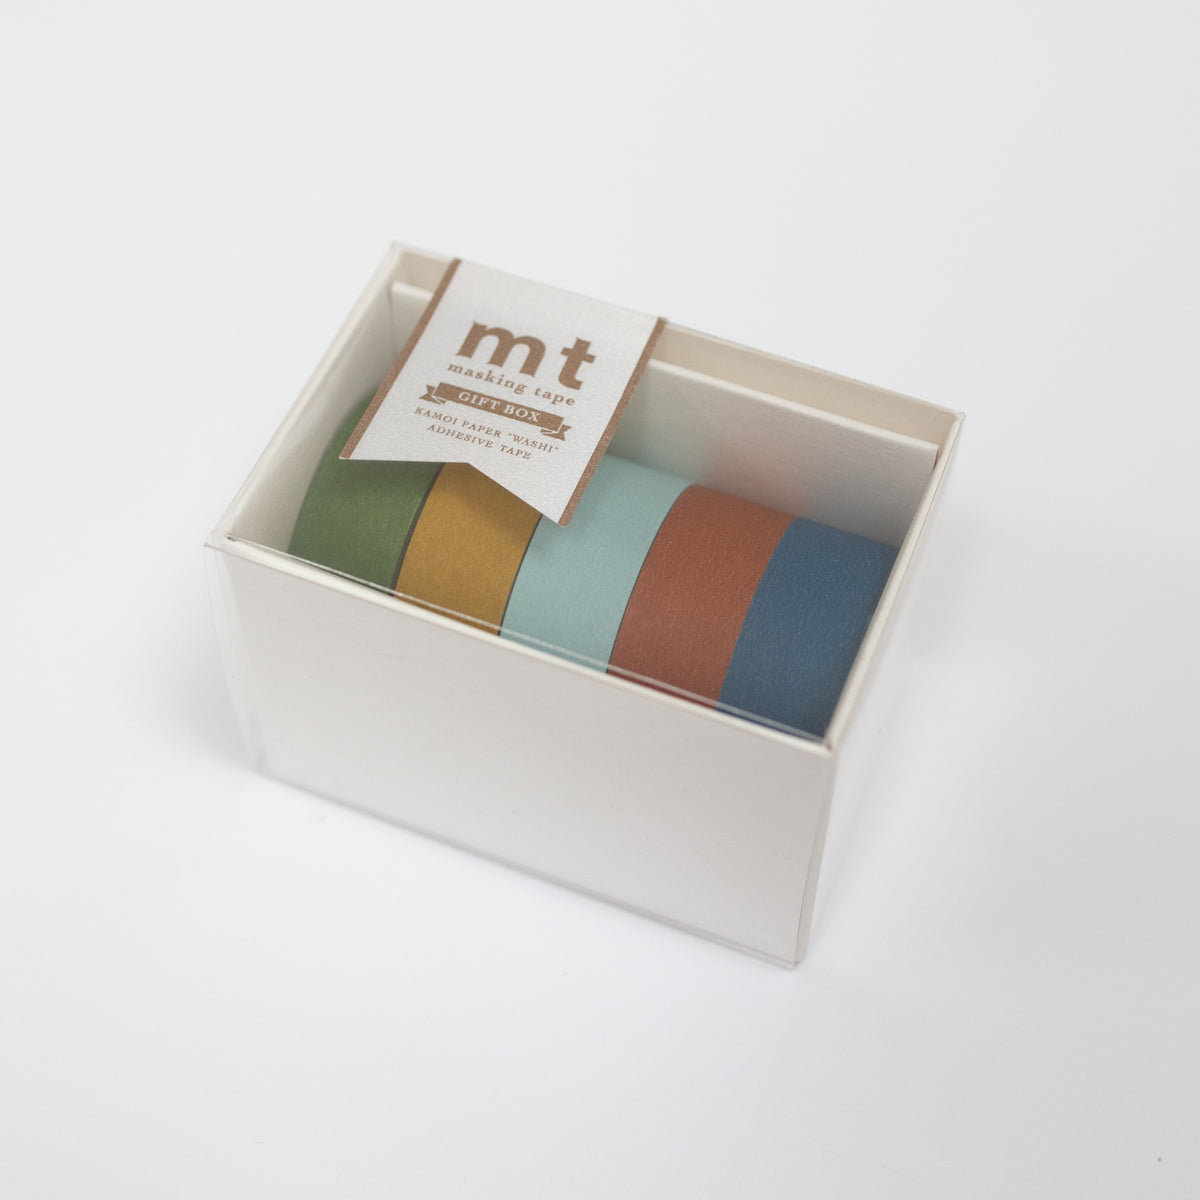 MT Masking tape Gift box matte